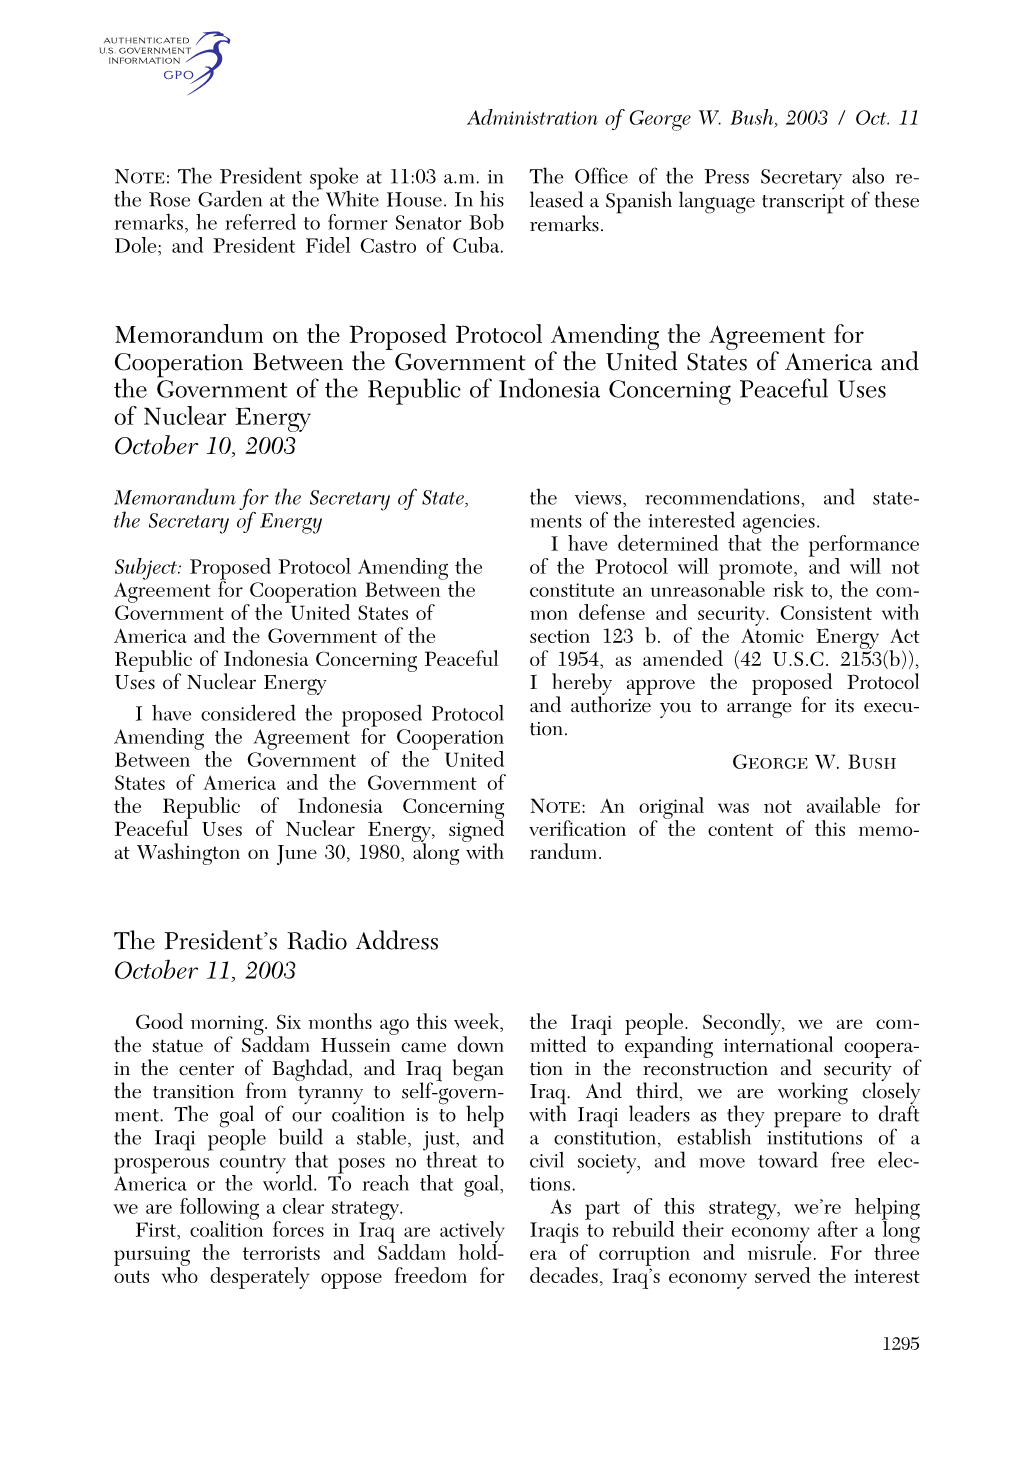 Memorandum on the Proposed Protocol Amending the Agreement